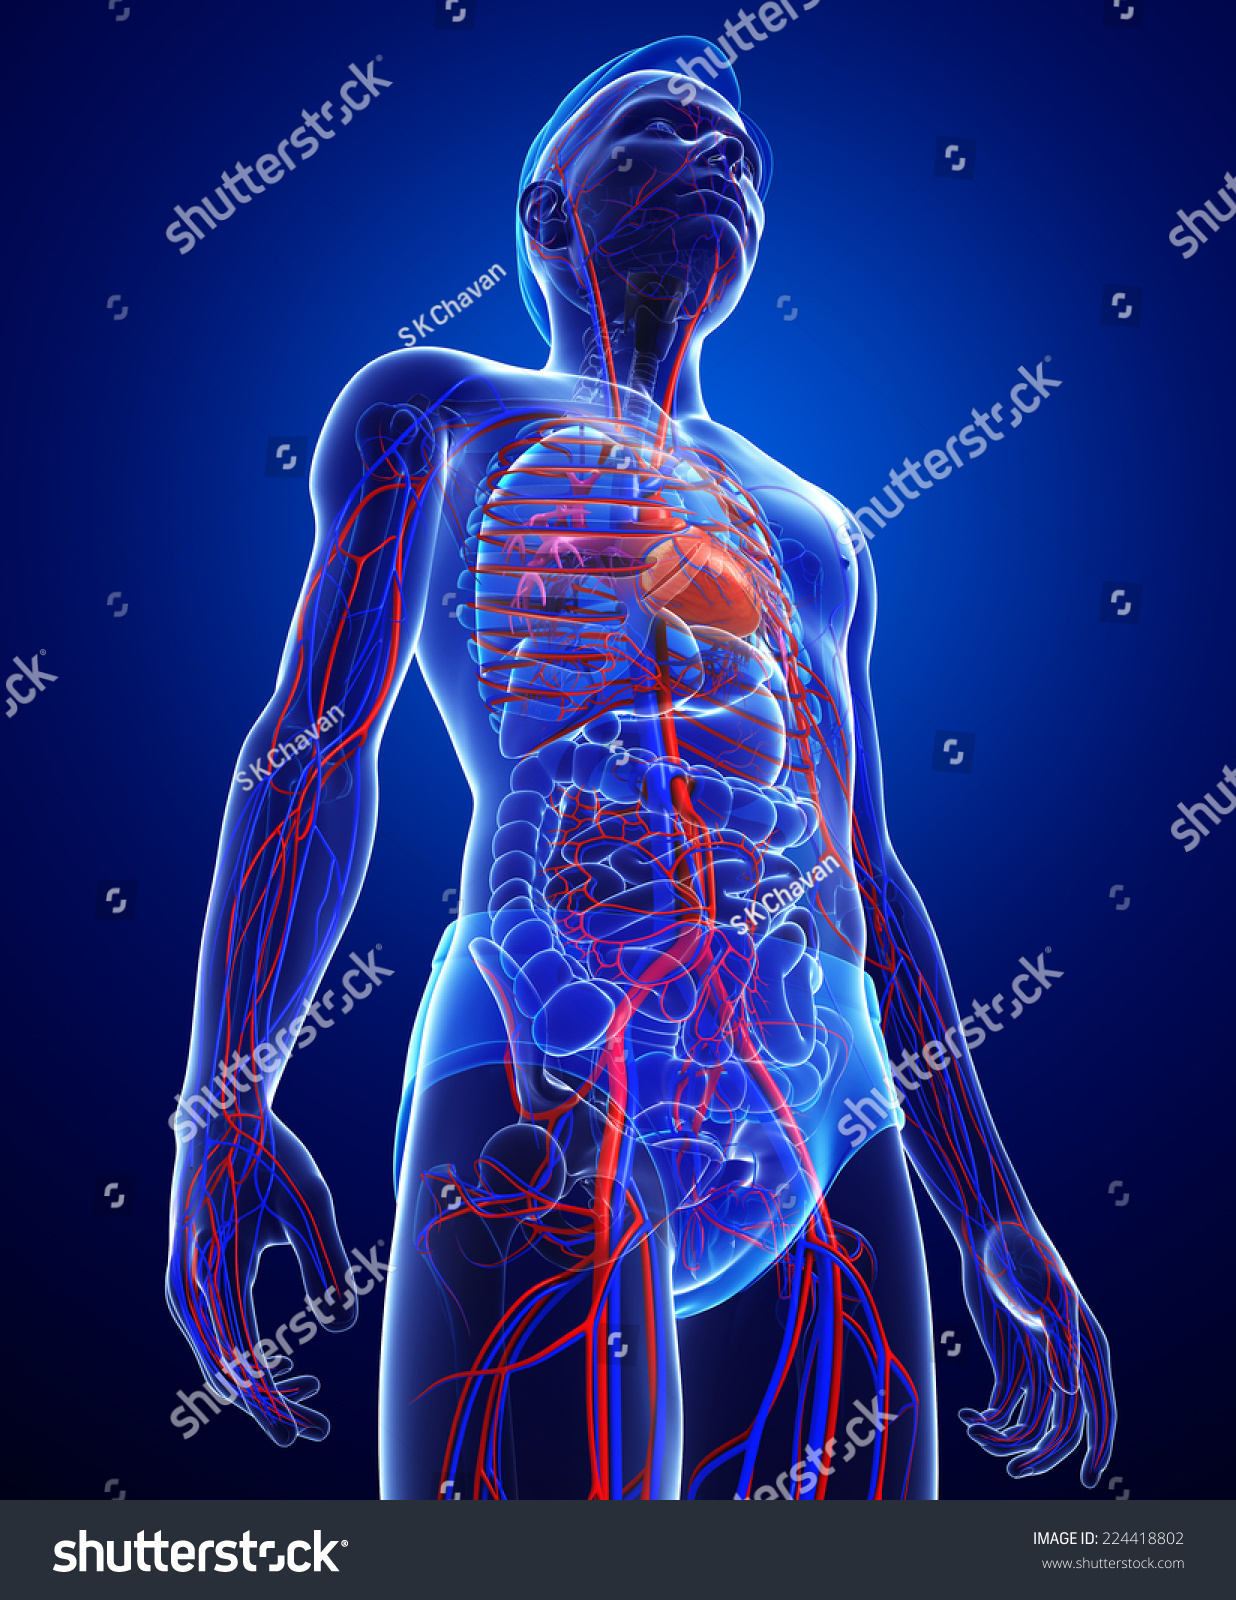 Illustration Of Male Circulatory System - 224418802 : Shutterstock